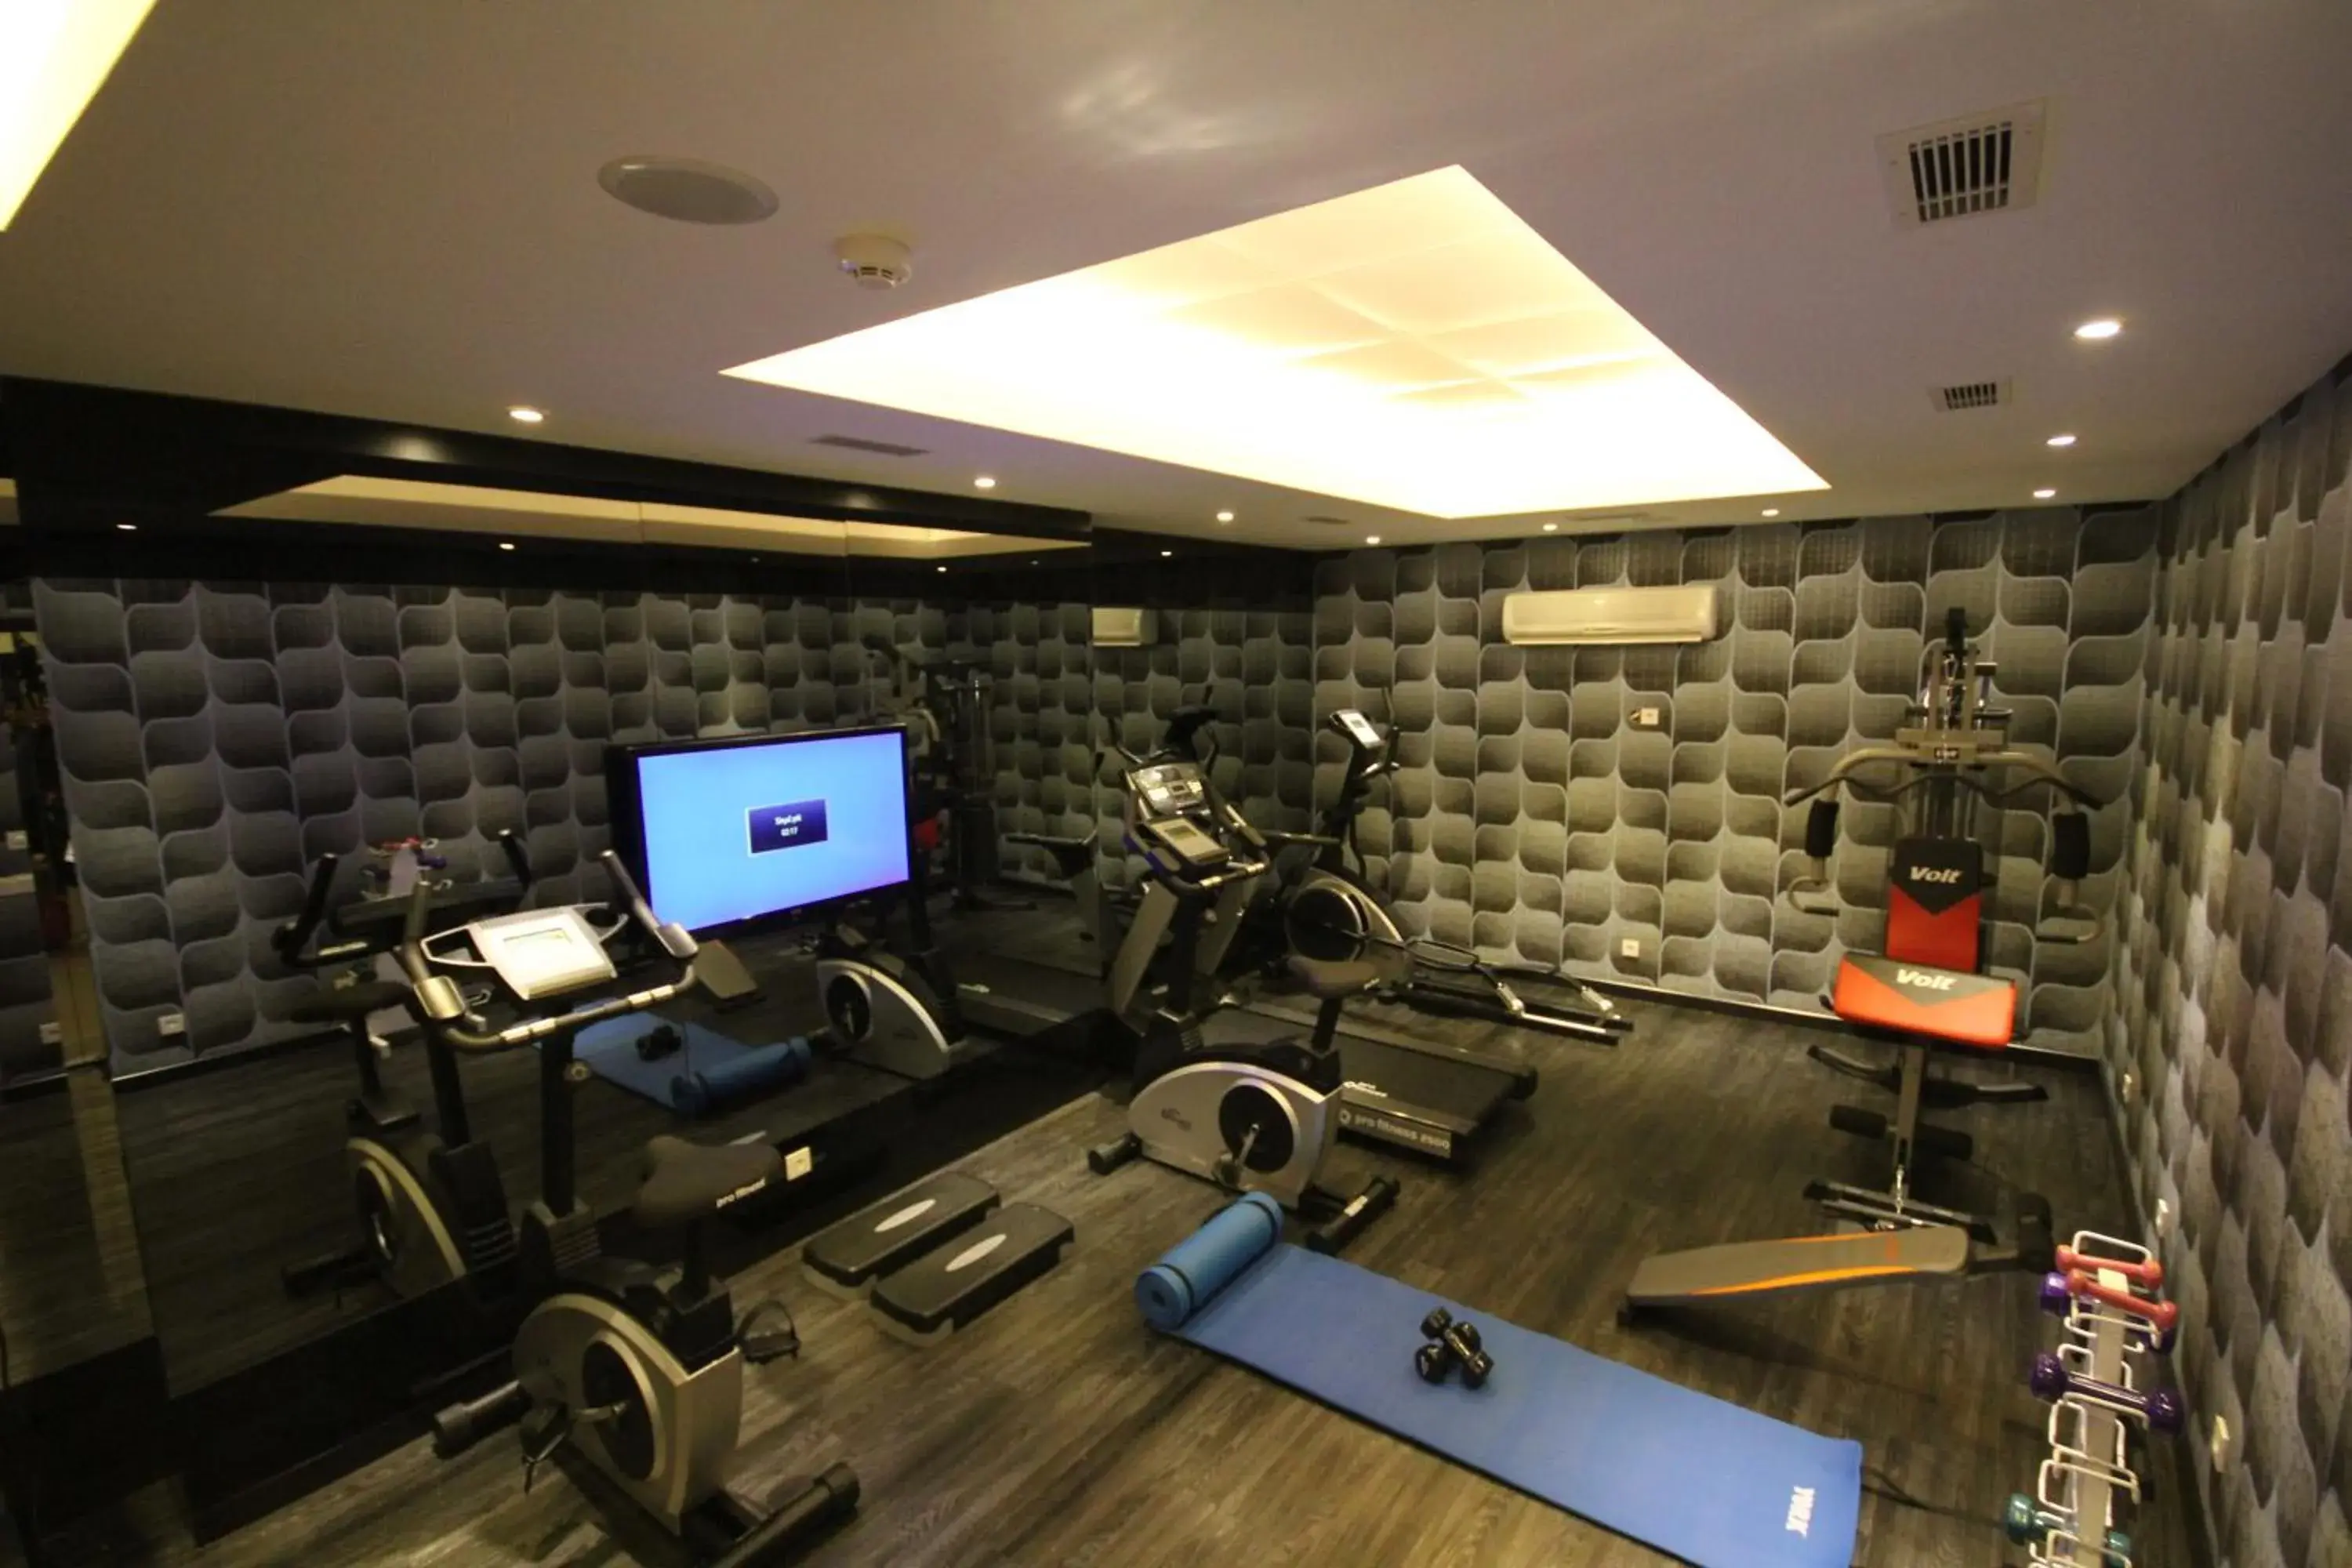 Fitness centre/facilities, Fitness Center/Facilities in Grand Washington Hotel